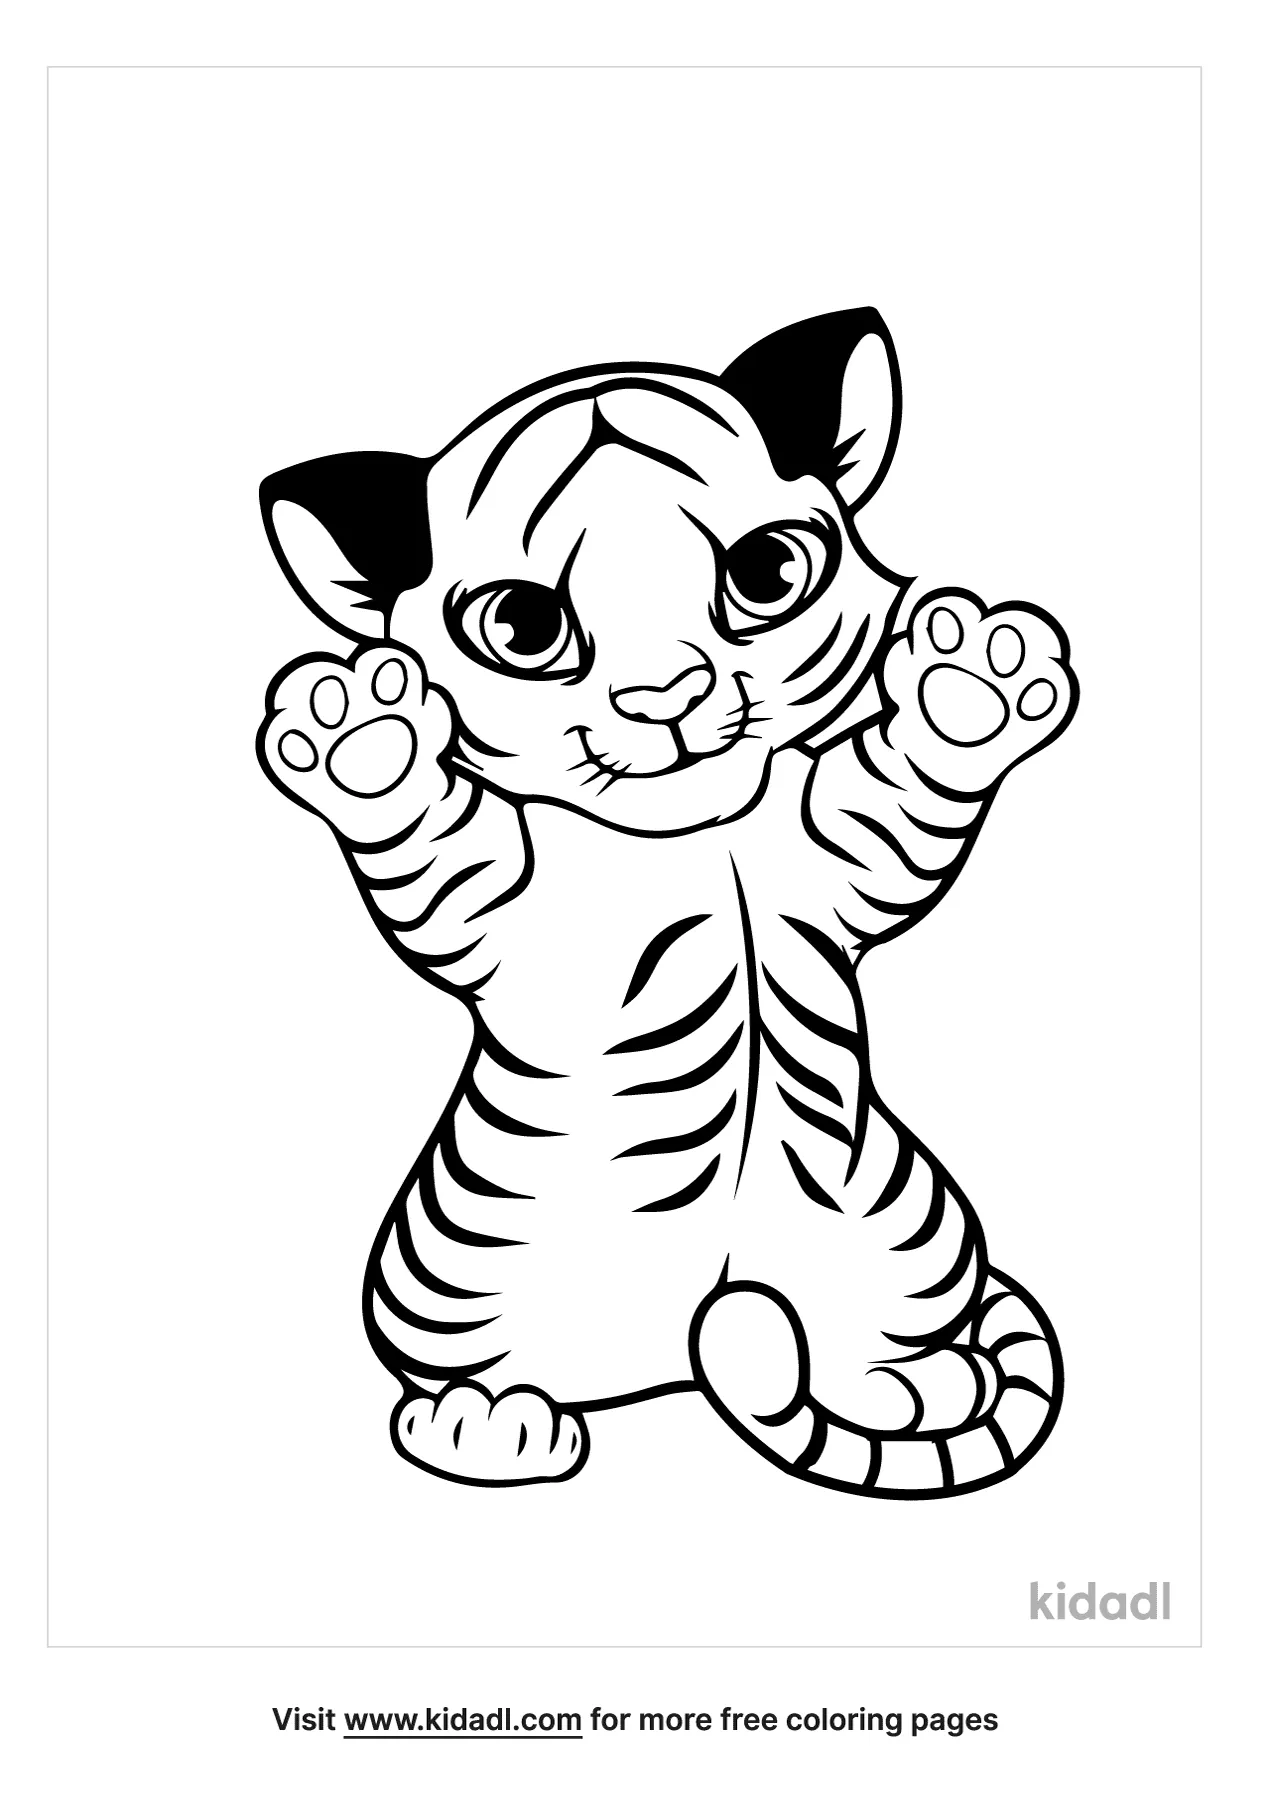 Free Cute Cartoon Tiger Coloring Page | Coloring Page Printables | Kidadl